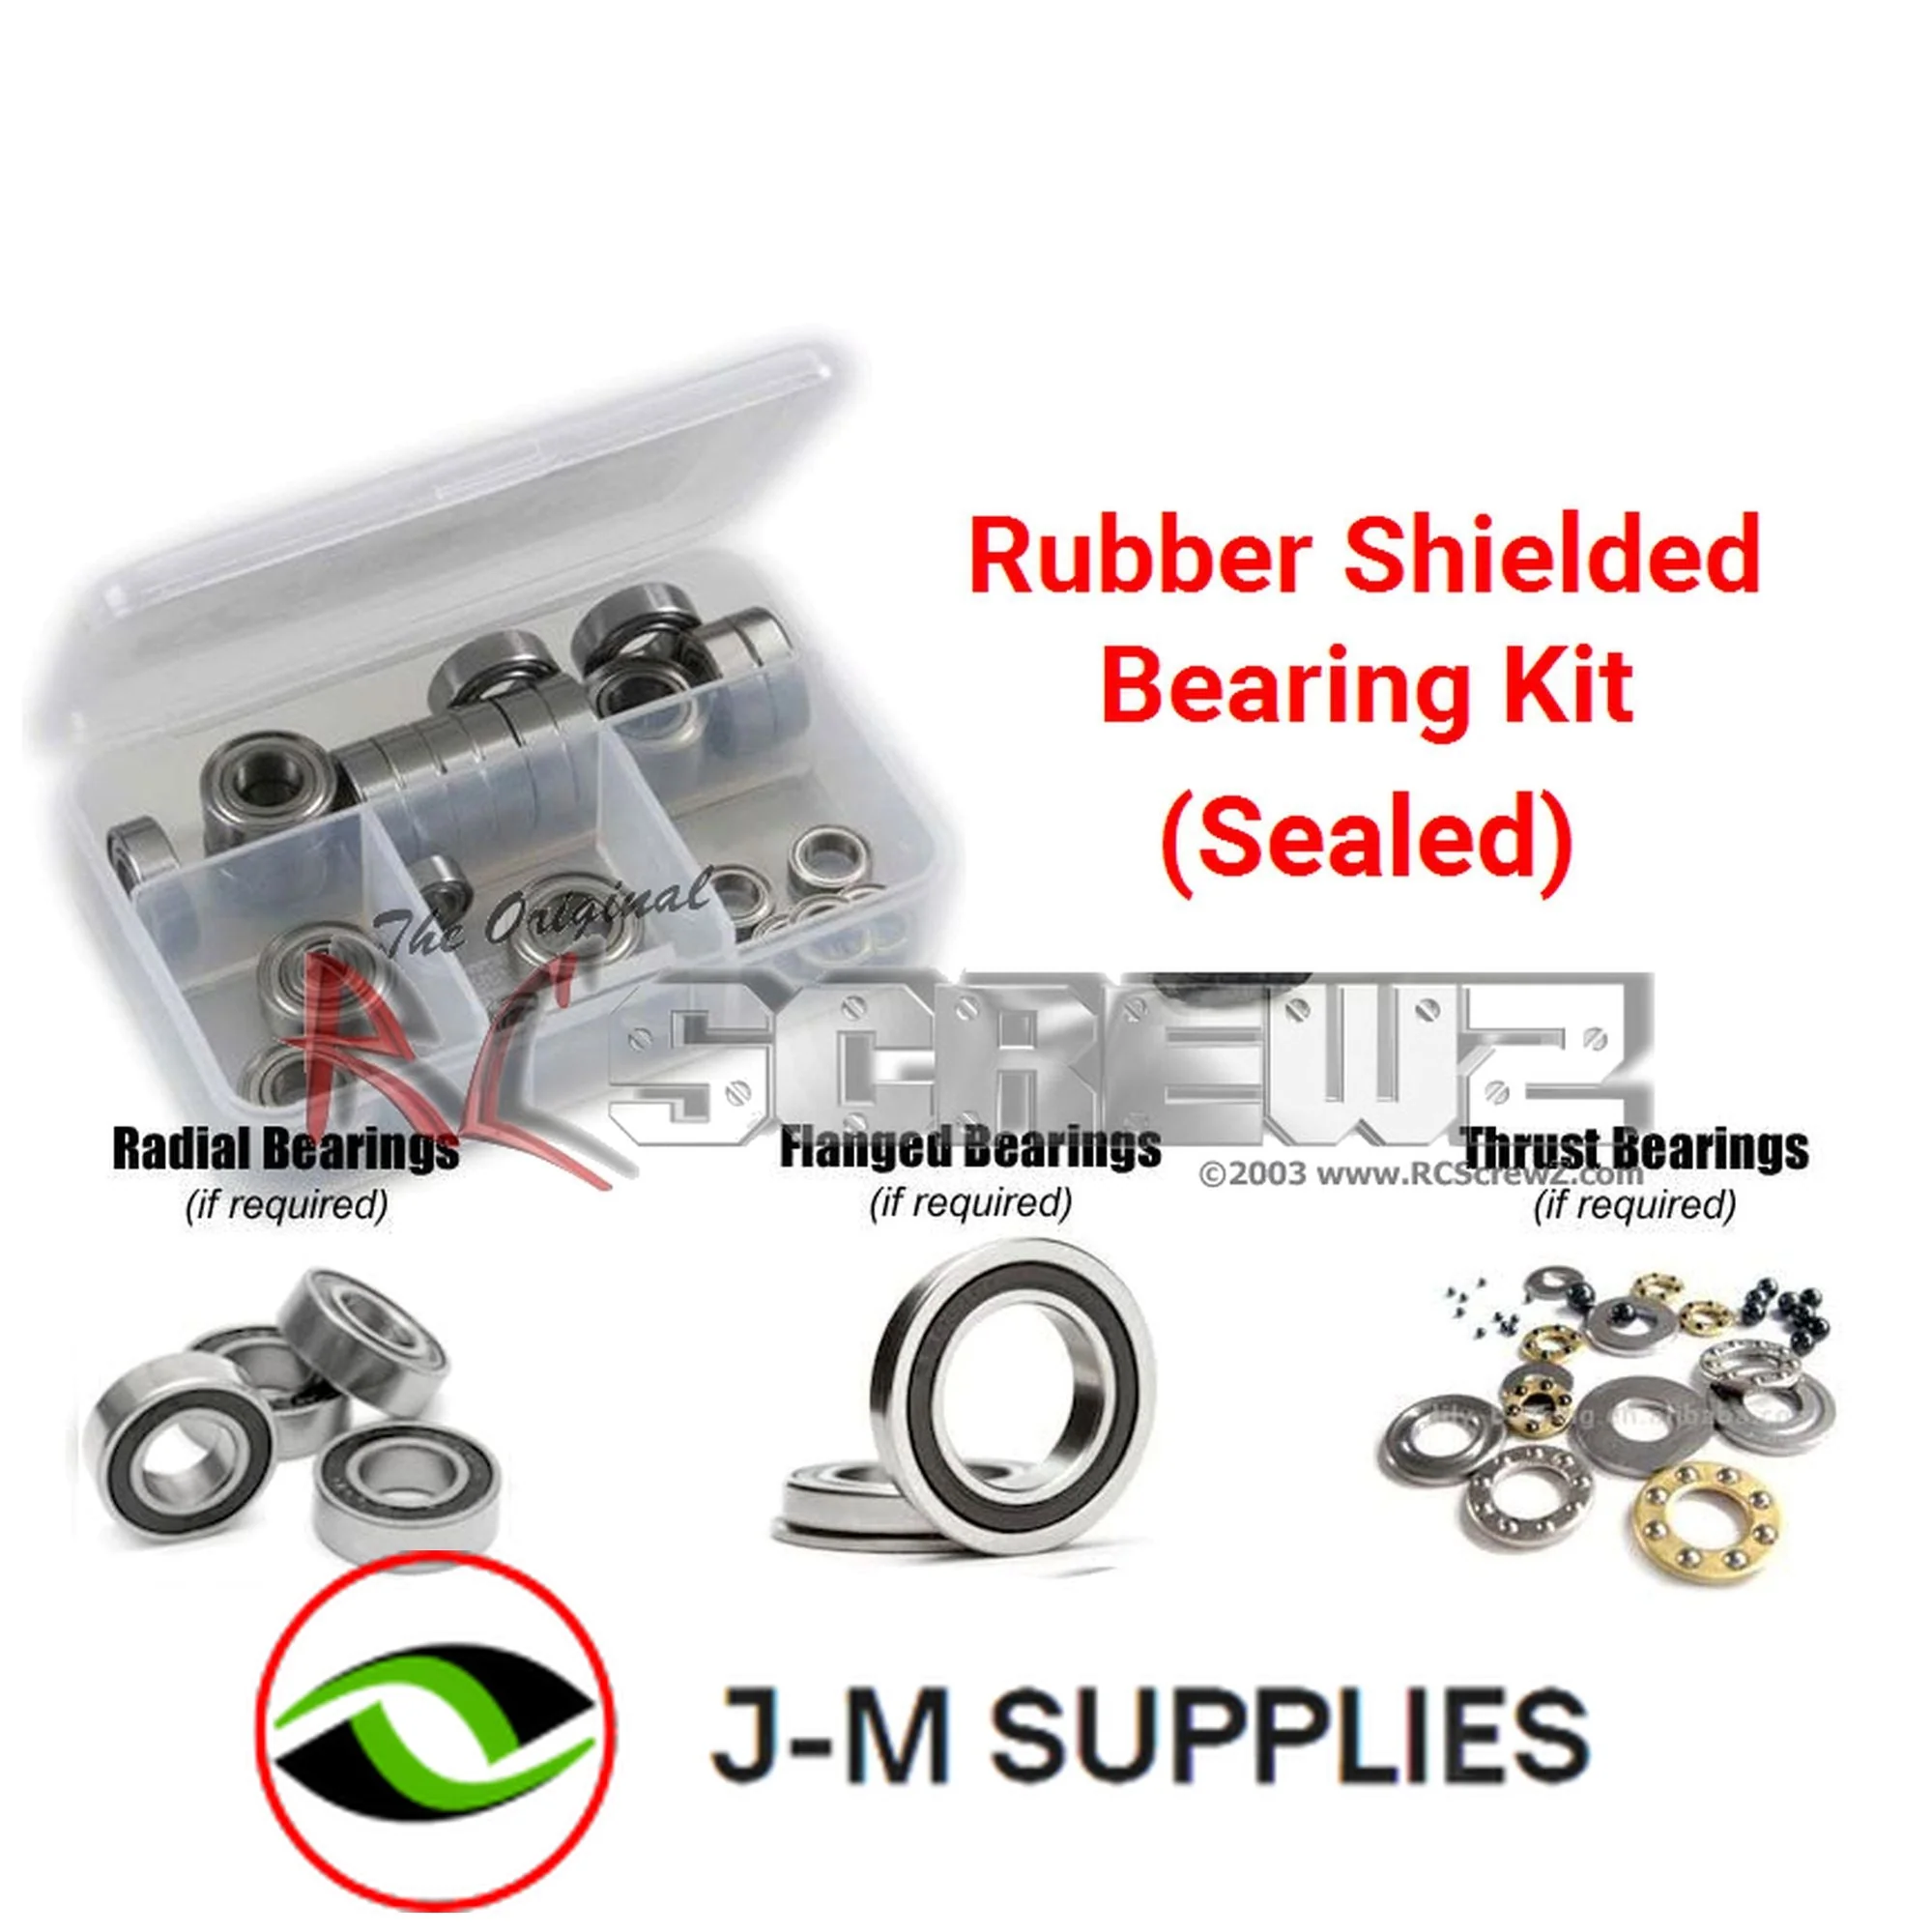 RCScrewZ Metal Shielded Bearing Kit yok012r for Yokomo MR4-BX 1/10th - Picture 1 of 12